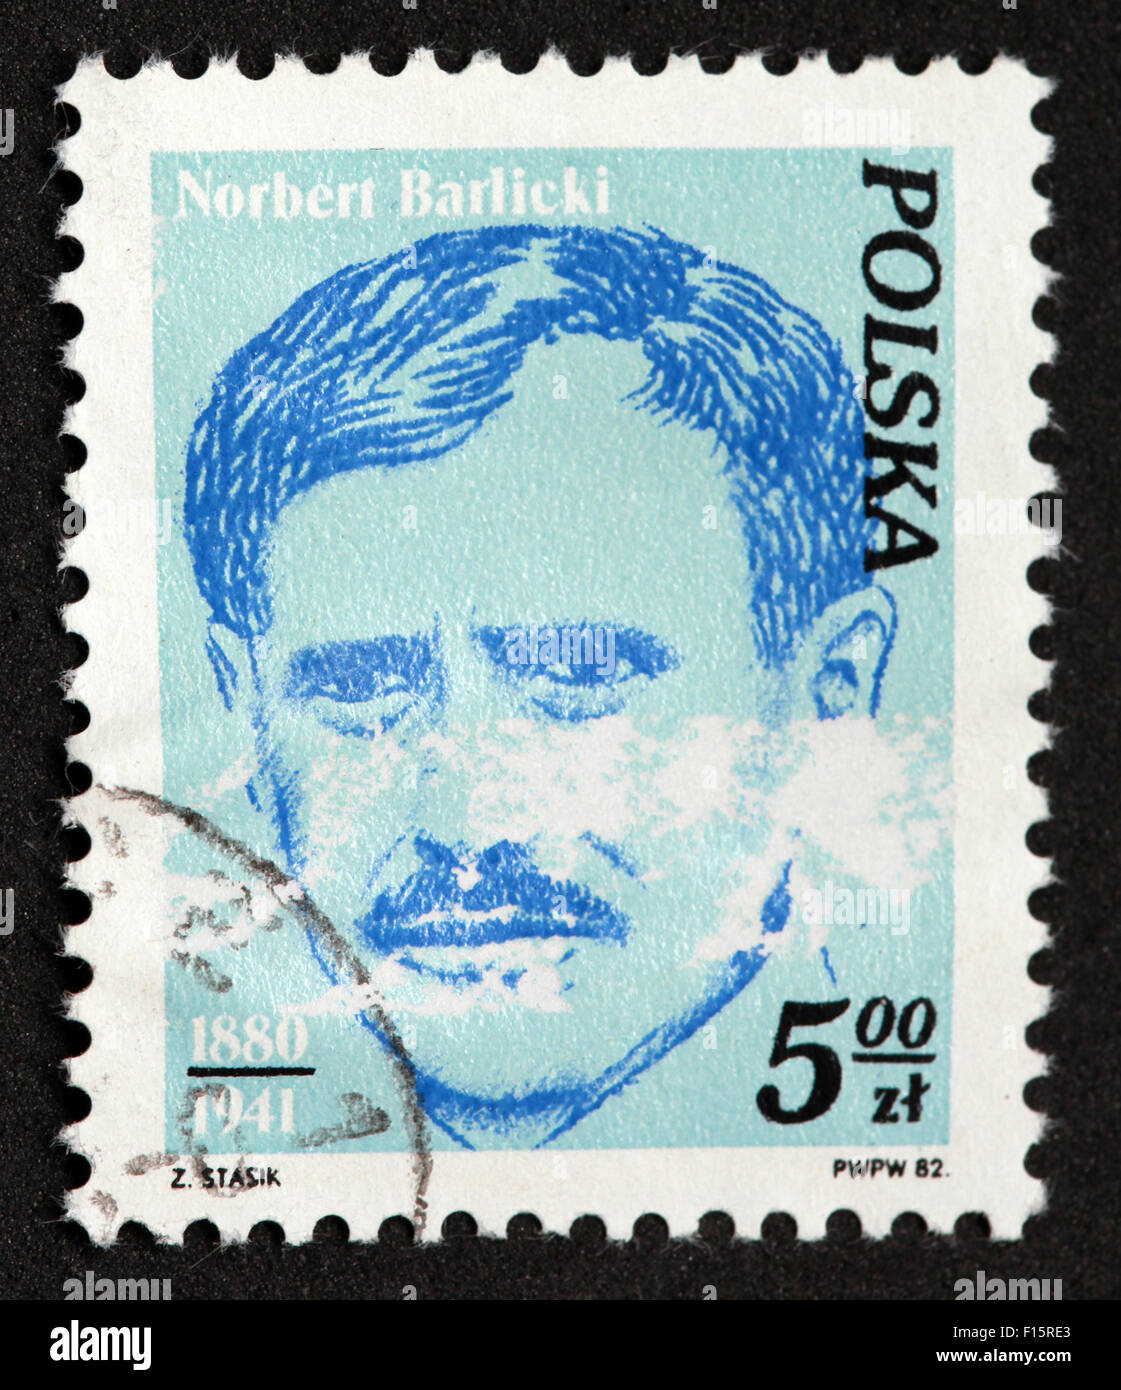 Polska 17zt Norbert Barlicki 1880-1941 Stamp Banque D'Images